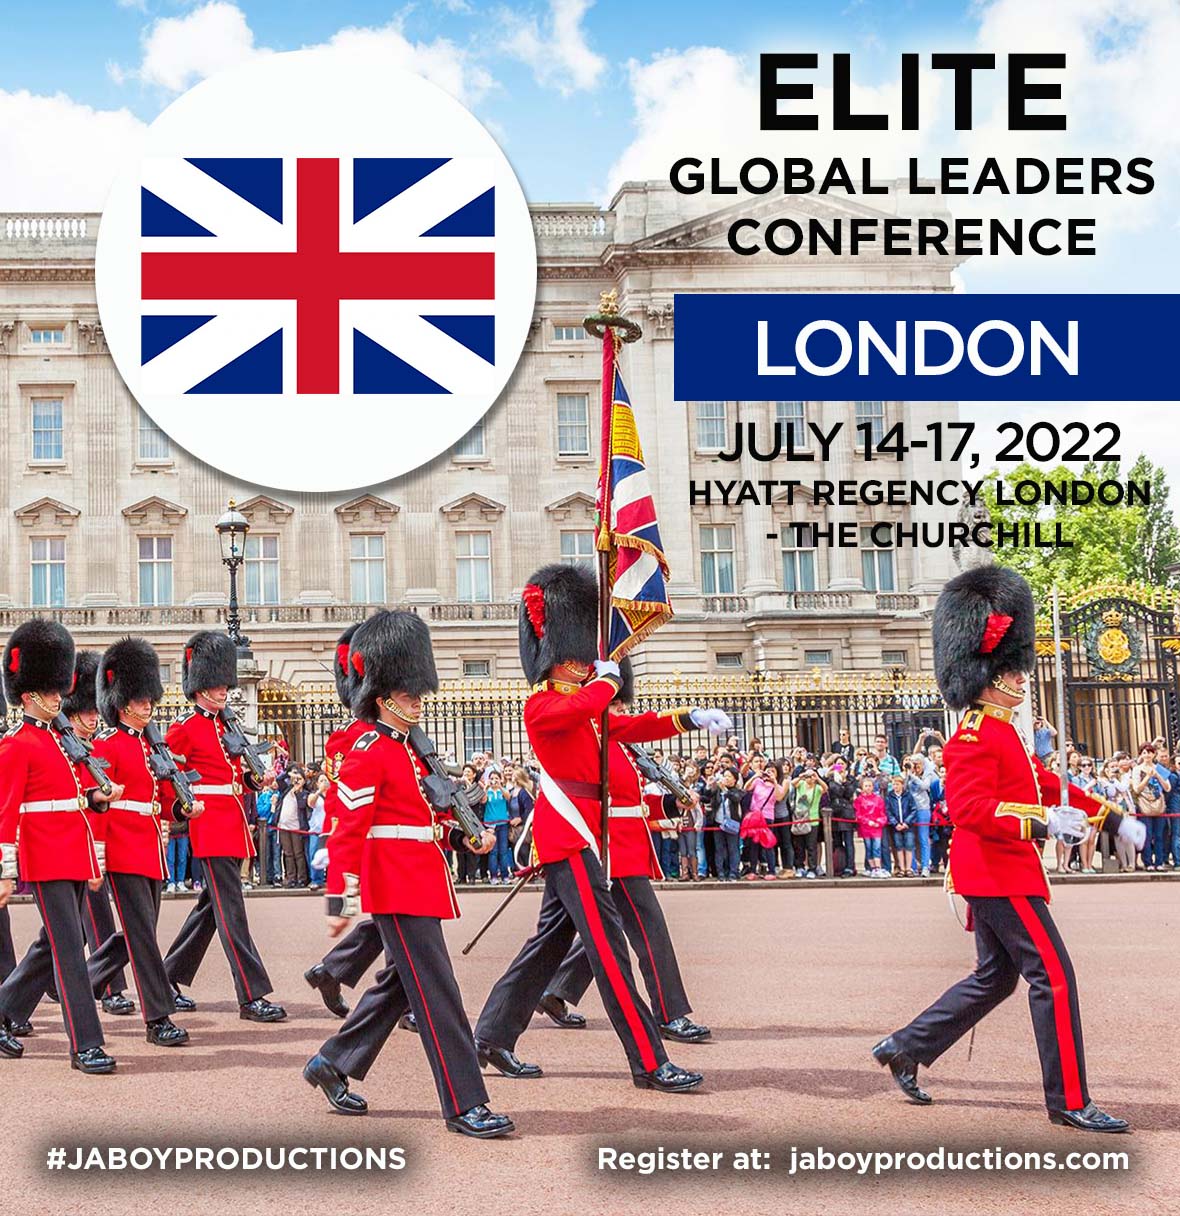 ELITE Global Leaders Conference - London  organized by Neil Greene